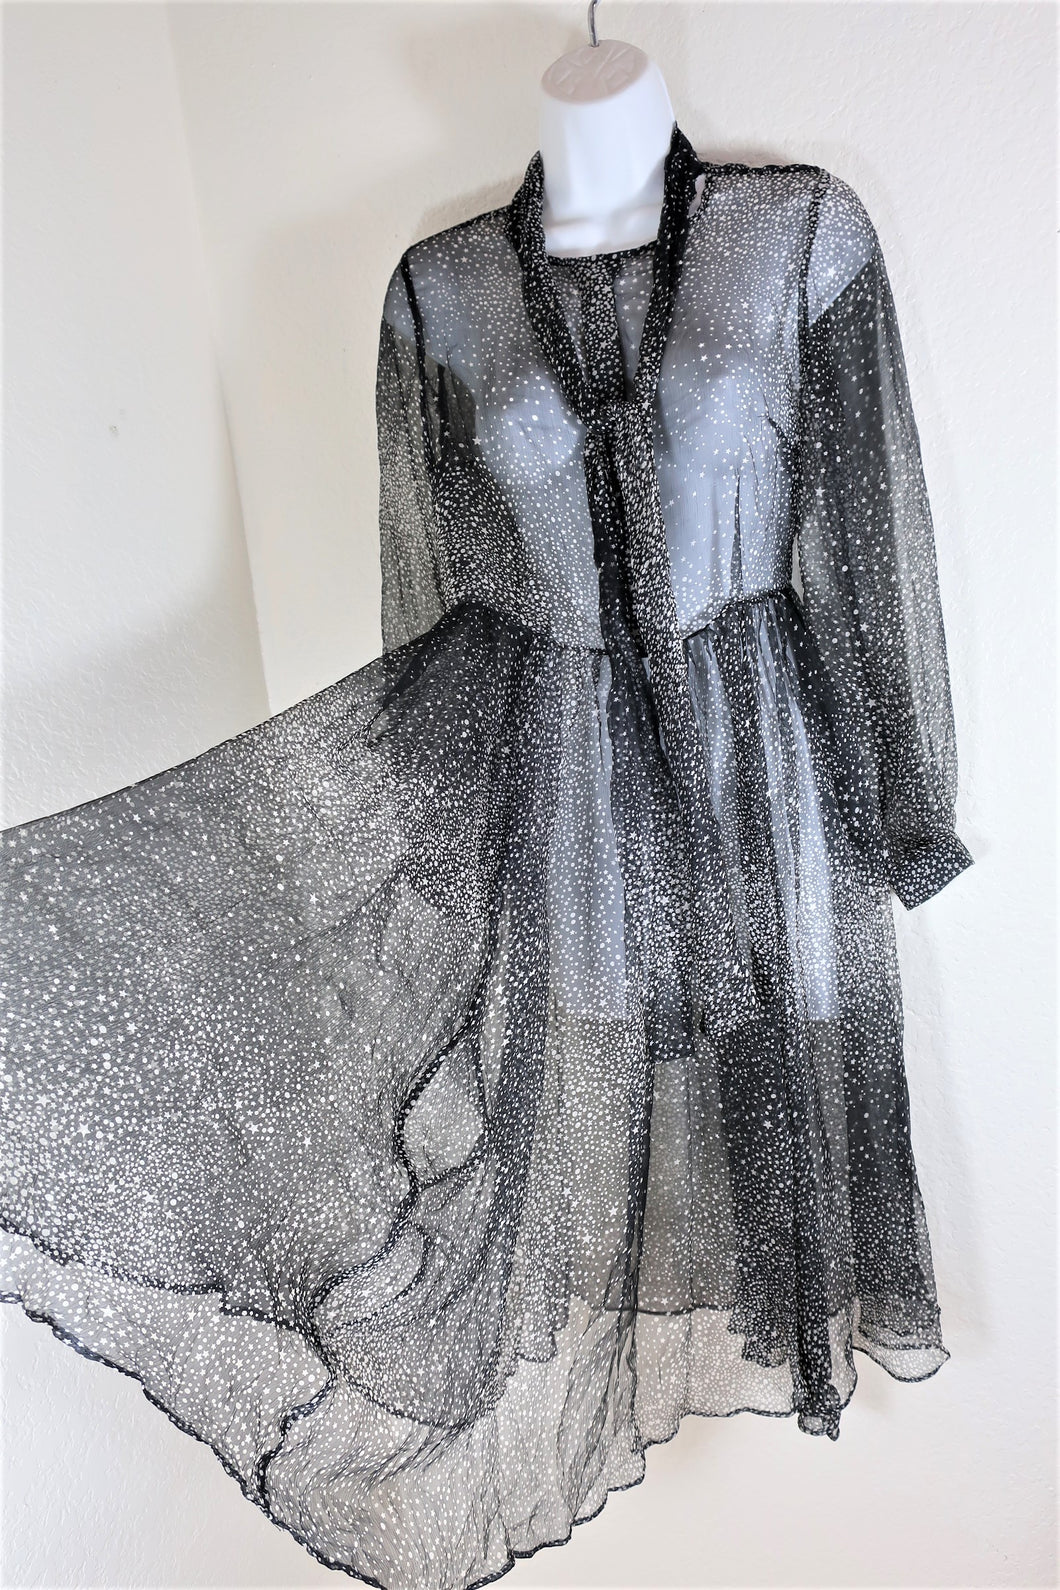 ZIMMERMANN Black Gold Mesh See-Through Long Sleeve Silk Dress Evening Gown XS Small S 0 1 2